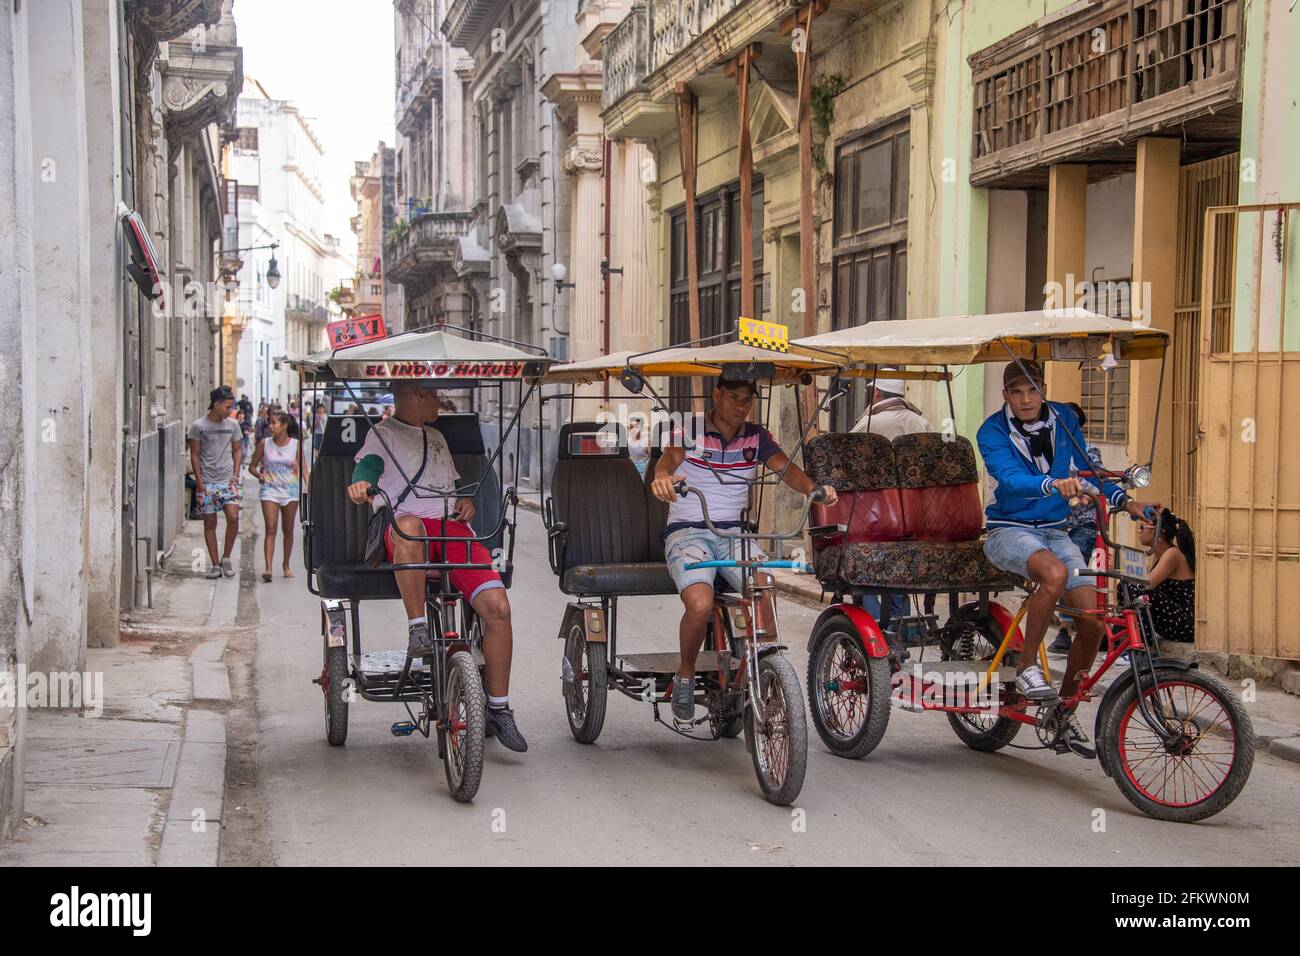 Three bici-taxis in Old Havana, Cuba Stock Photo